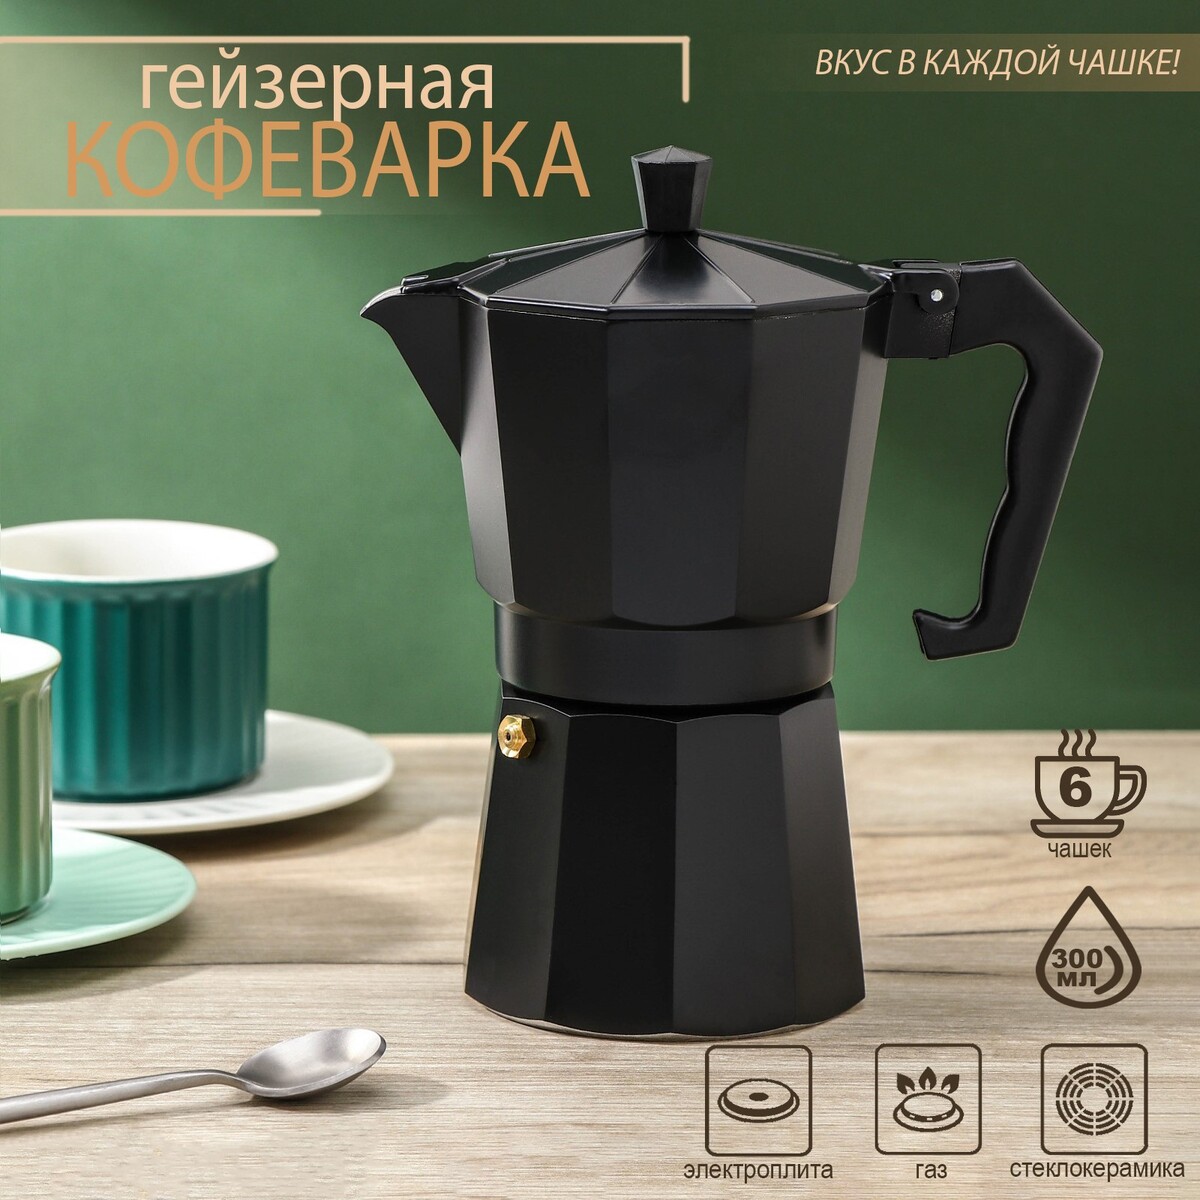 Кофеварка гейзерная доляна alum black, на 6 чашек, 300 мл кофеварка гейзерная 300 мл vinzer latte crema 6 чашек